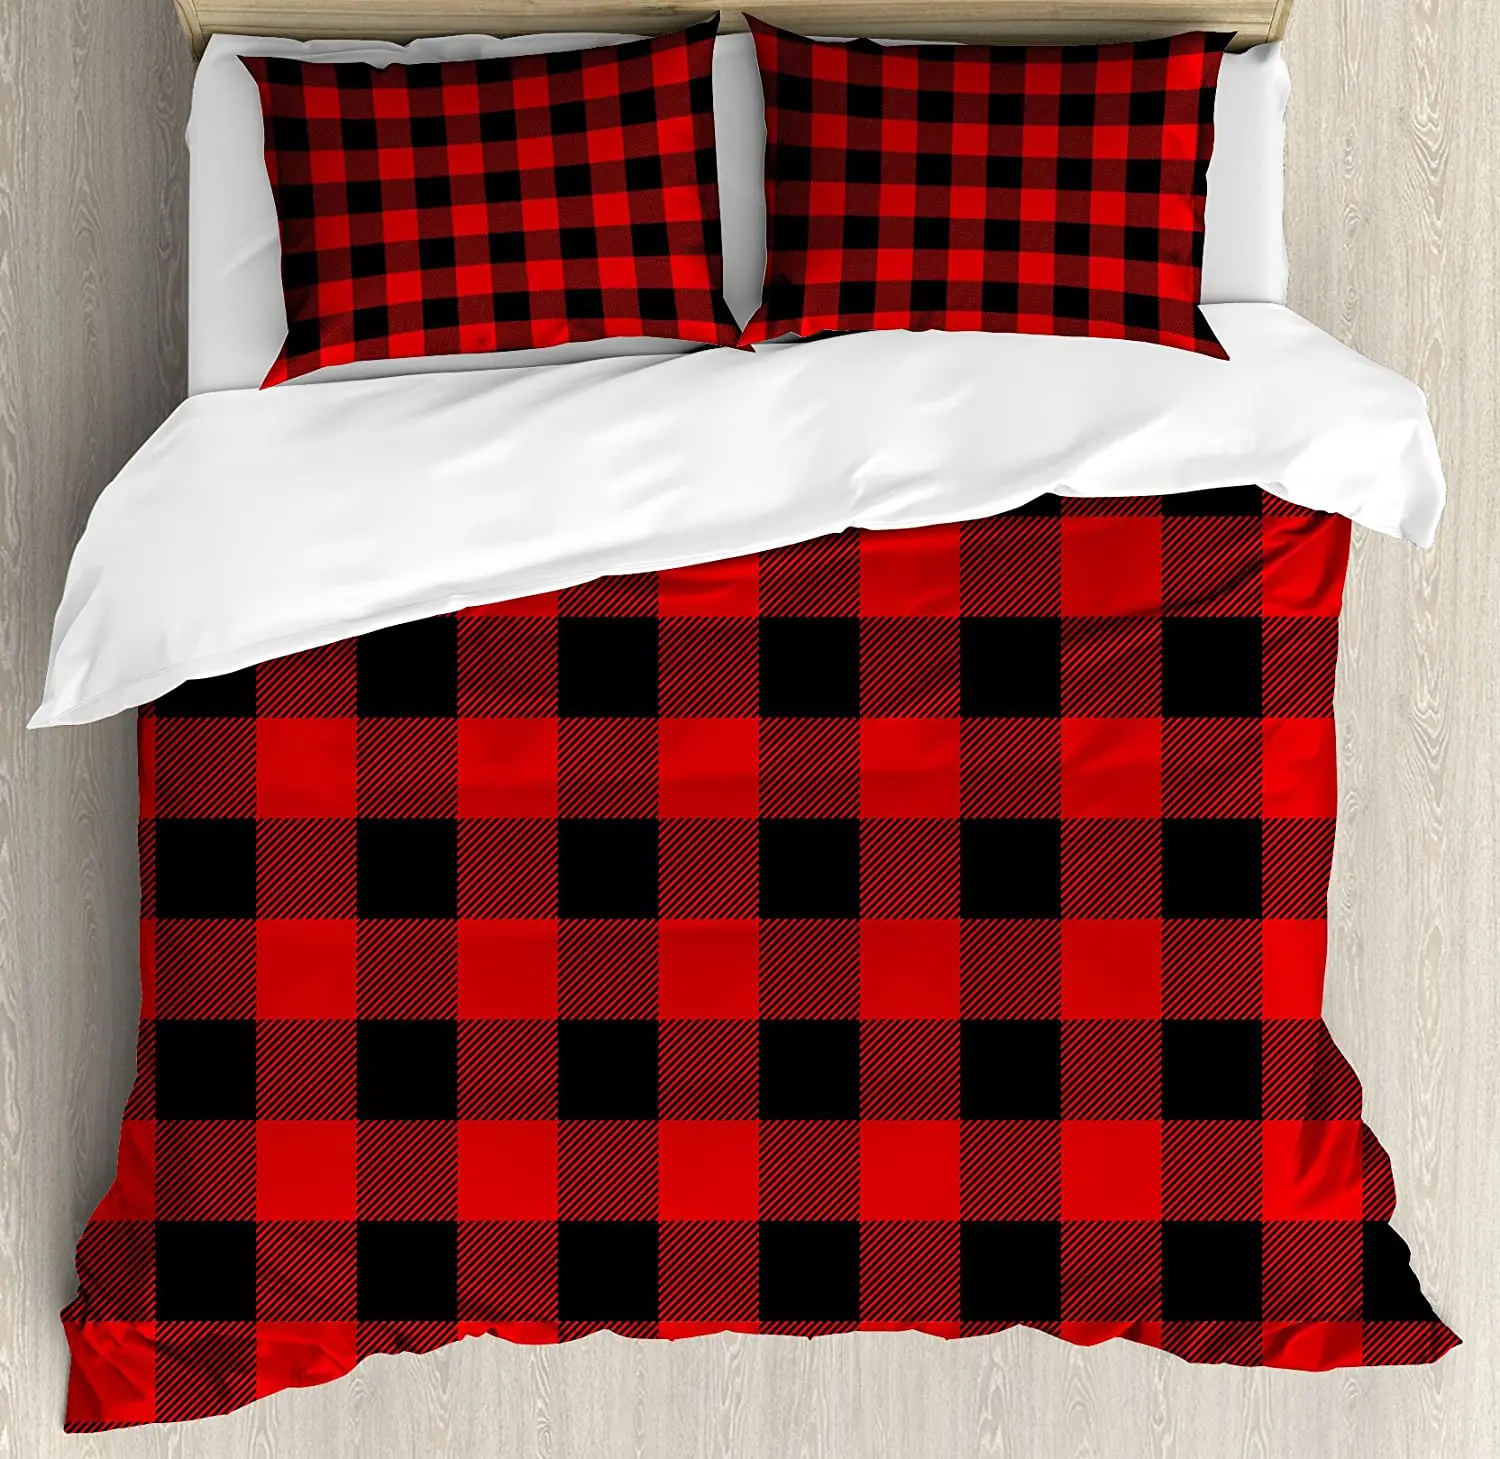 

Plaid Bedding Set Comforter Duvet Cover Pillow Shams by Lumberjack Fashion Buffalo Style Checks Pat Bedding Cover Double Bed Set